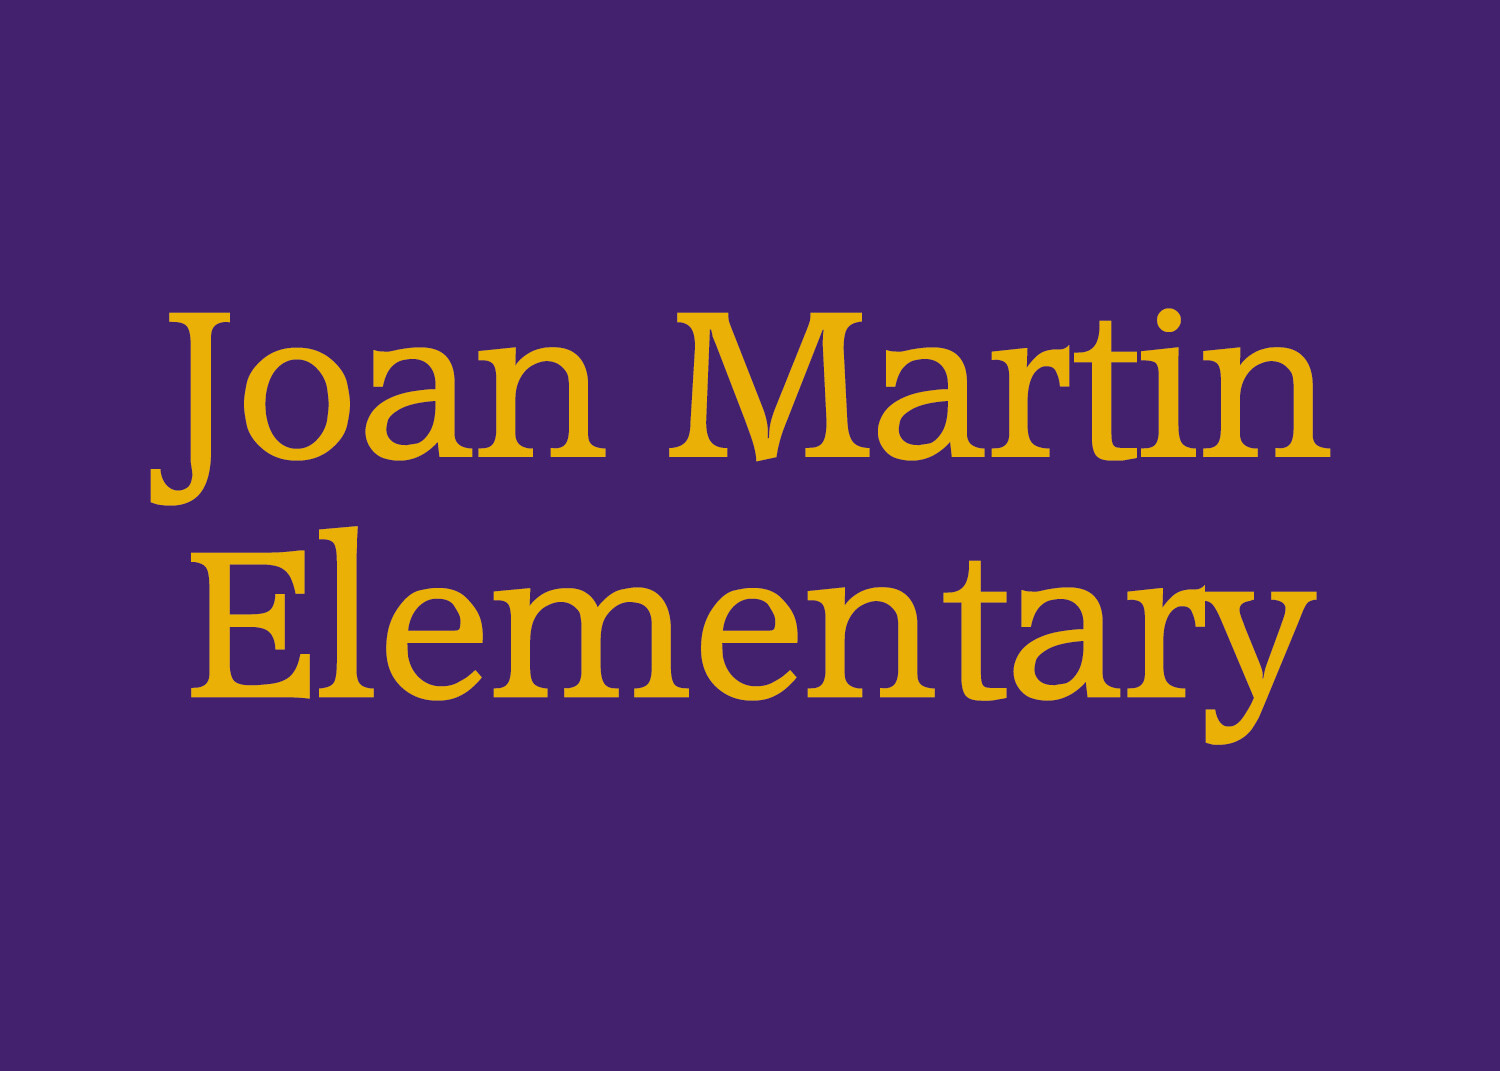 Joan Martin Elementary Yearbook